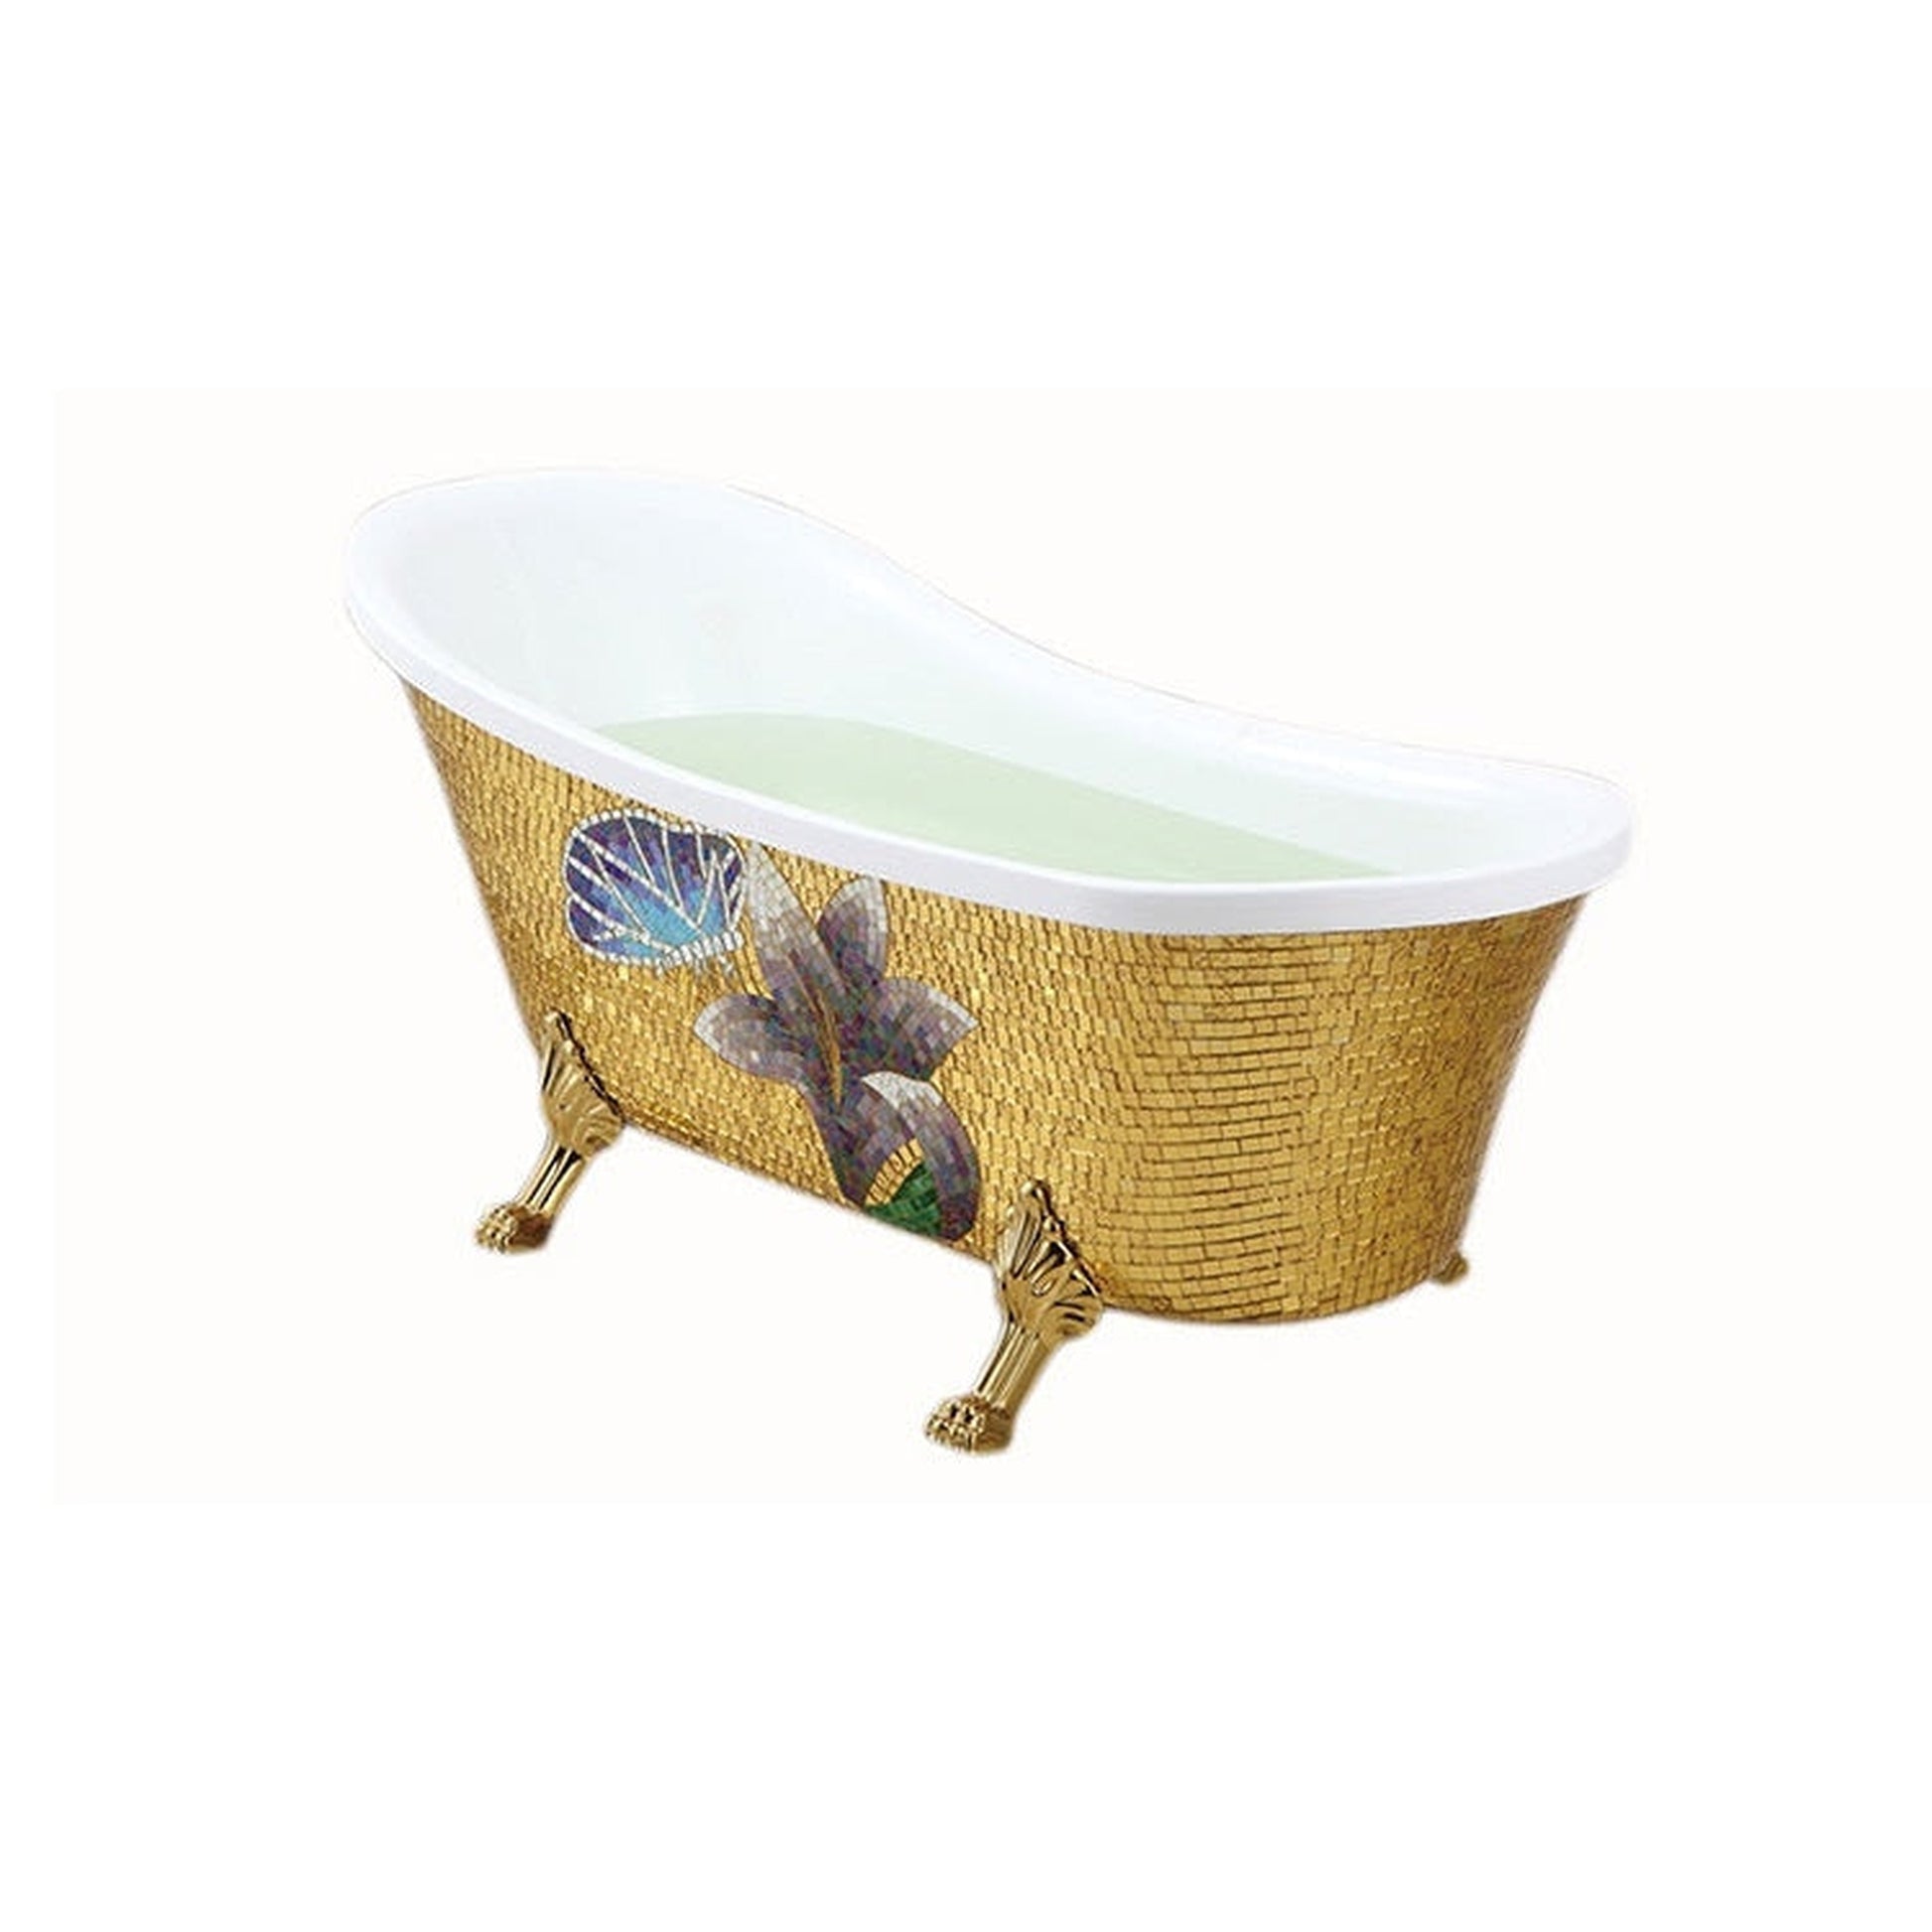 Fontana Sierra 59" x 30" Single Slipper Gold Oval Freestanding Indoor Soaking Acrylic Bathtub